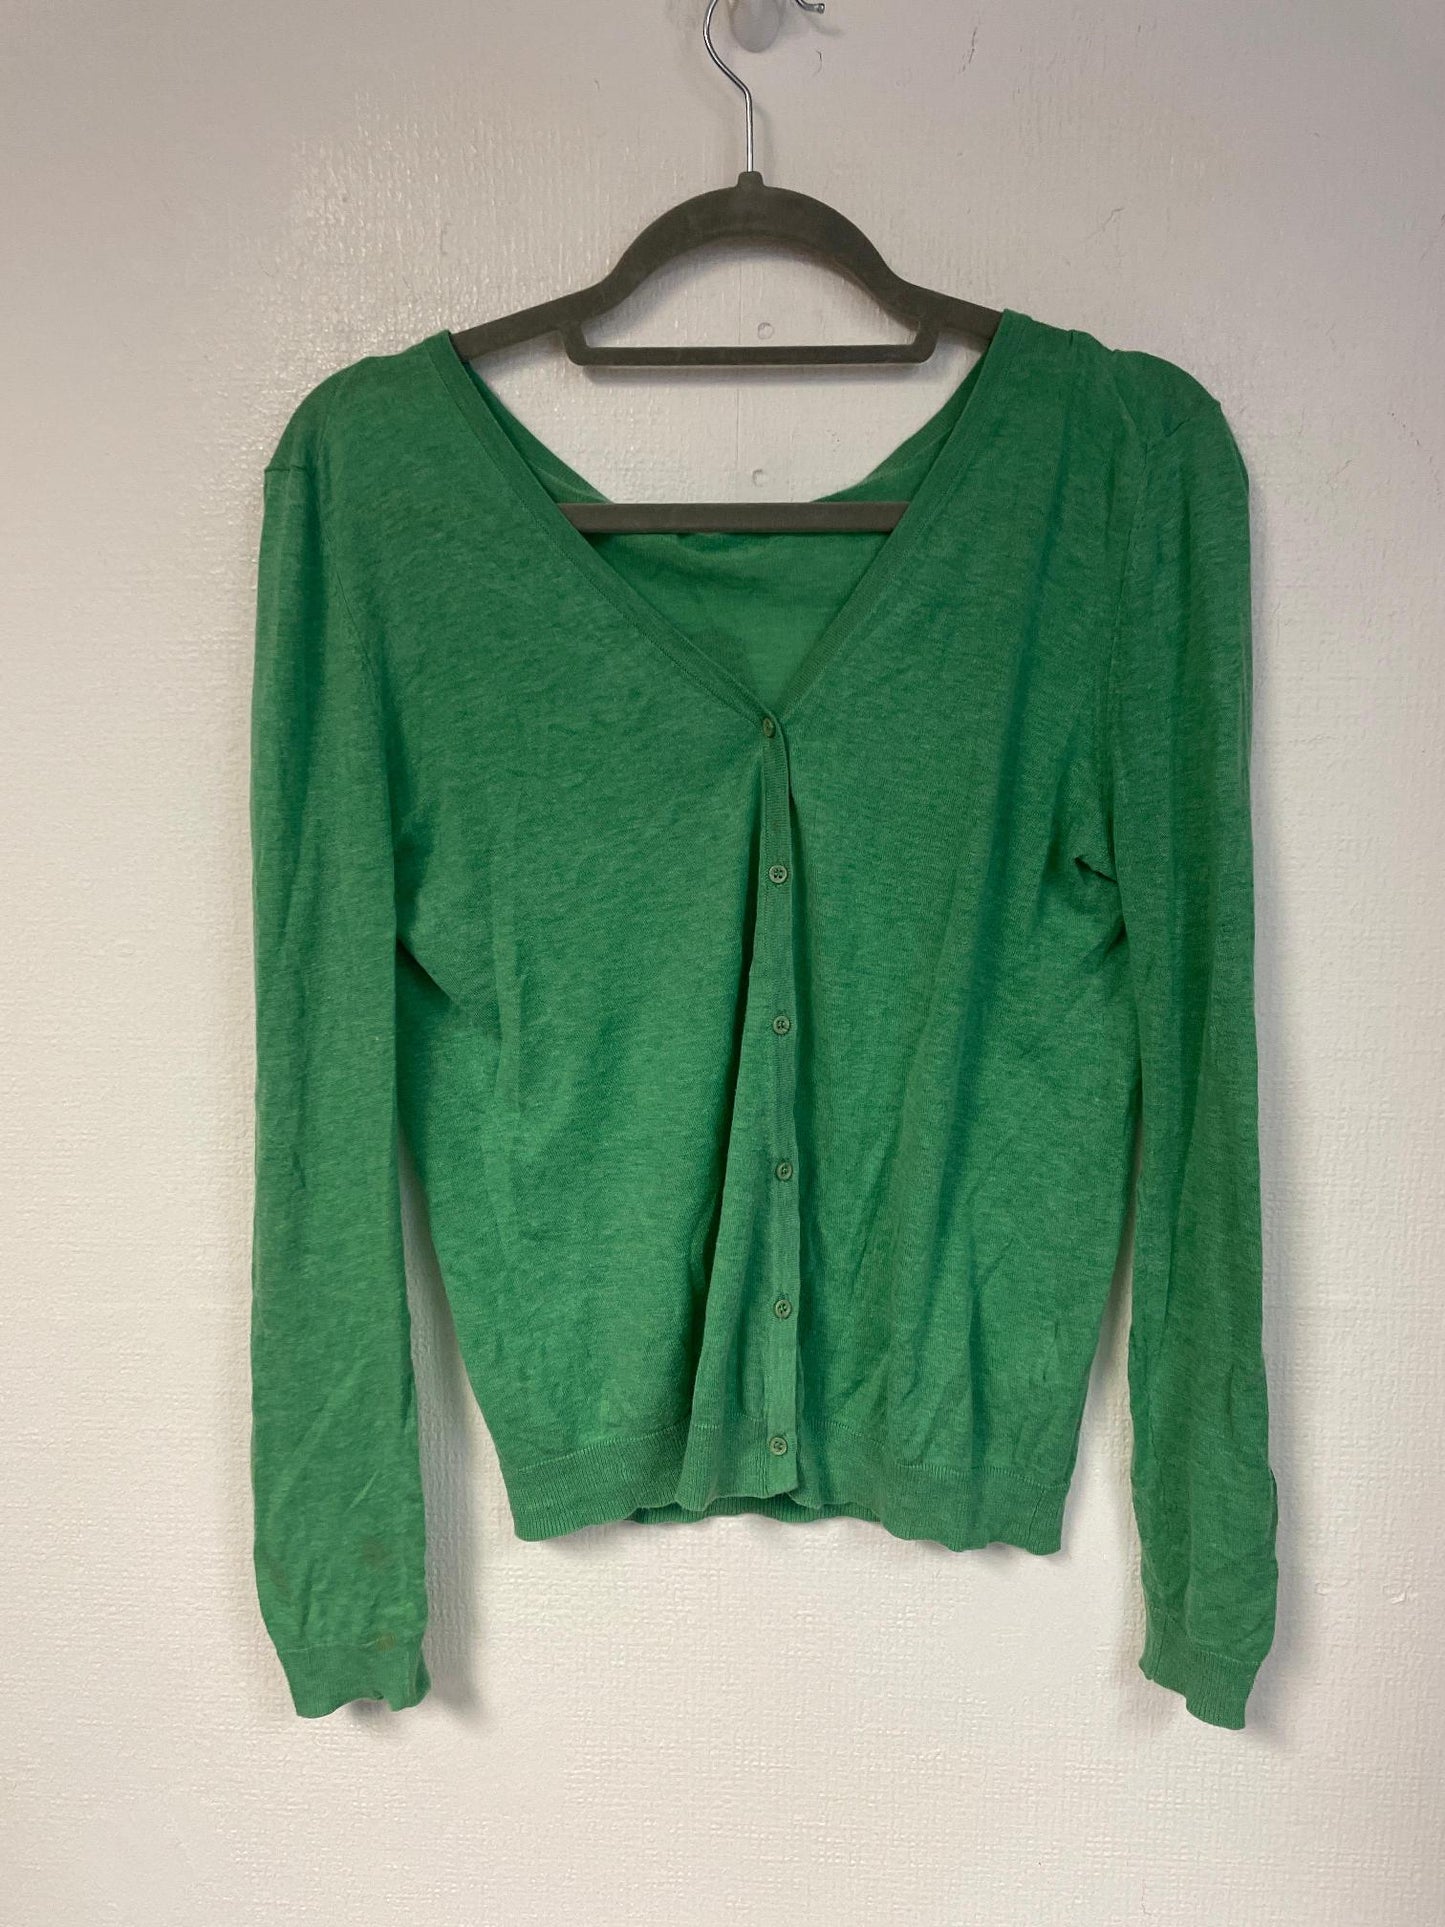 Green soft cardigan, size 8 - Damaged Item Sale